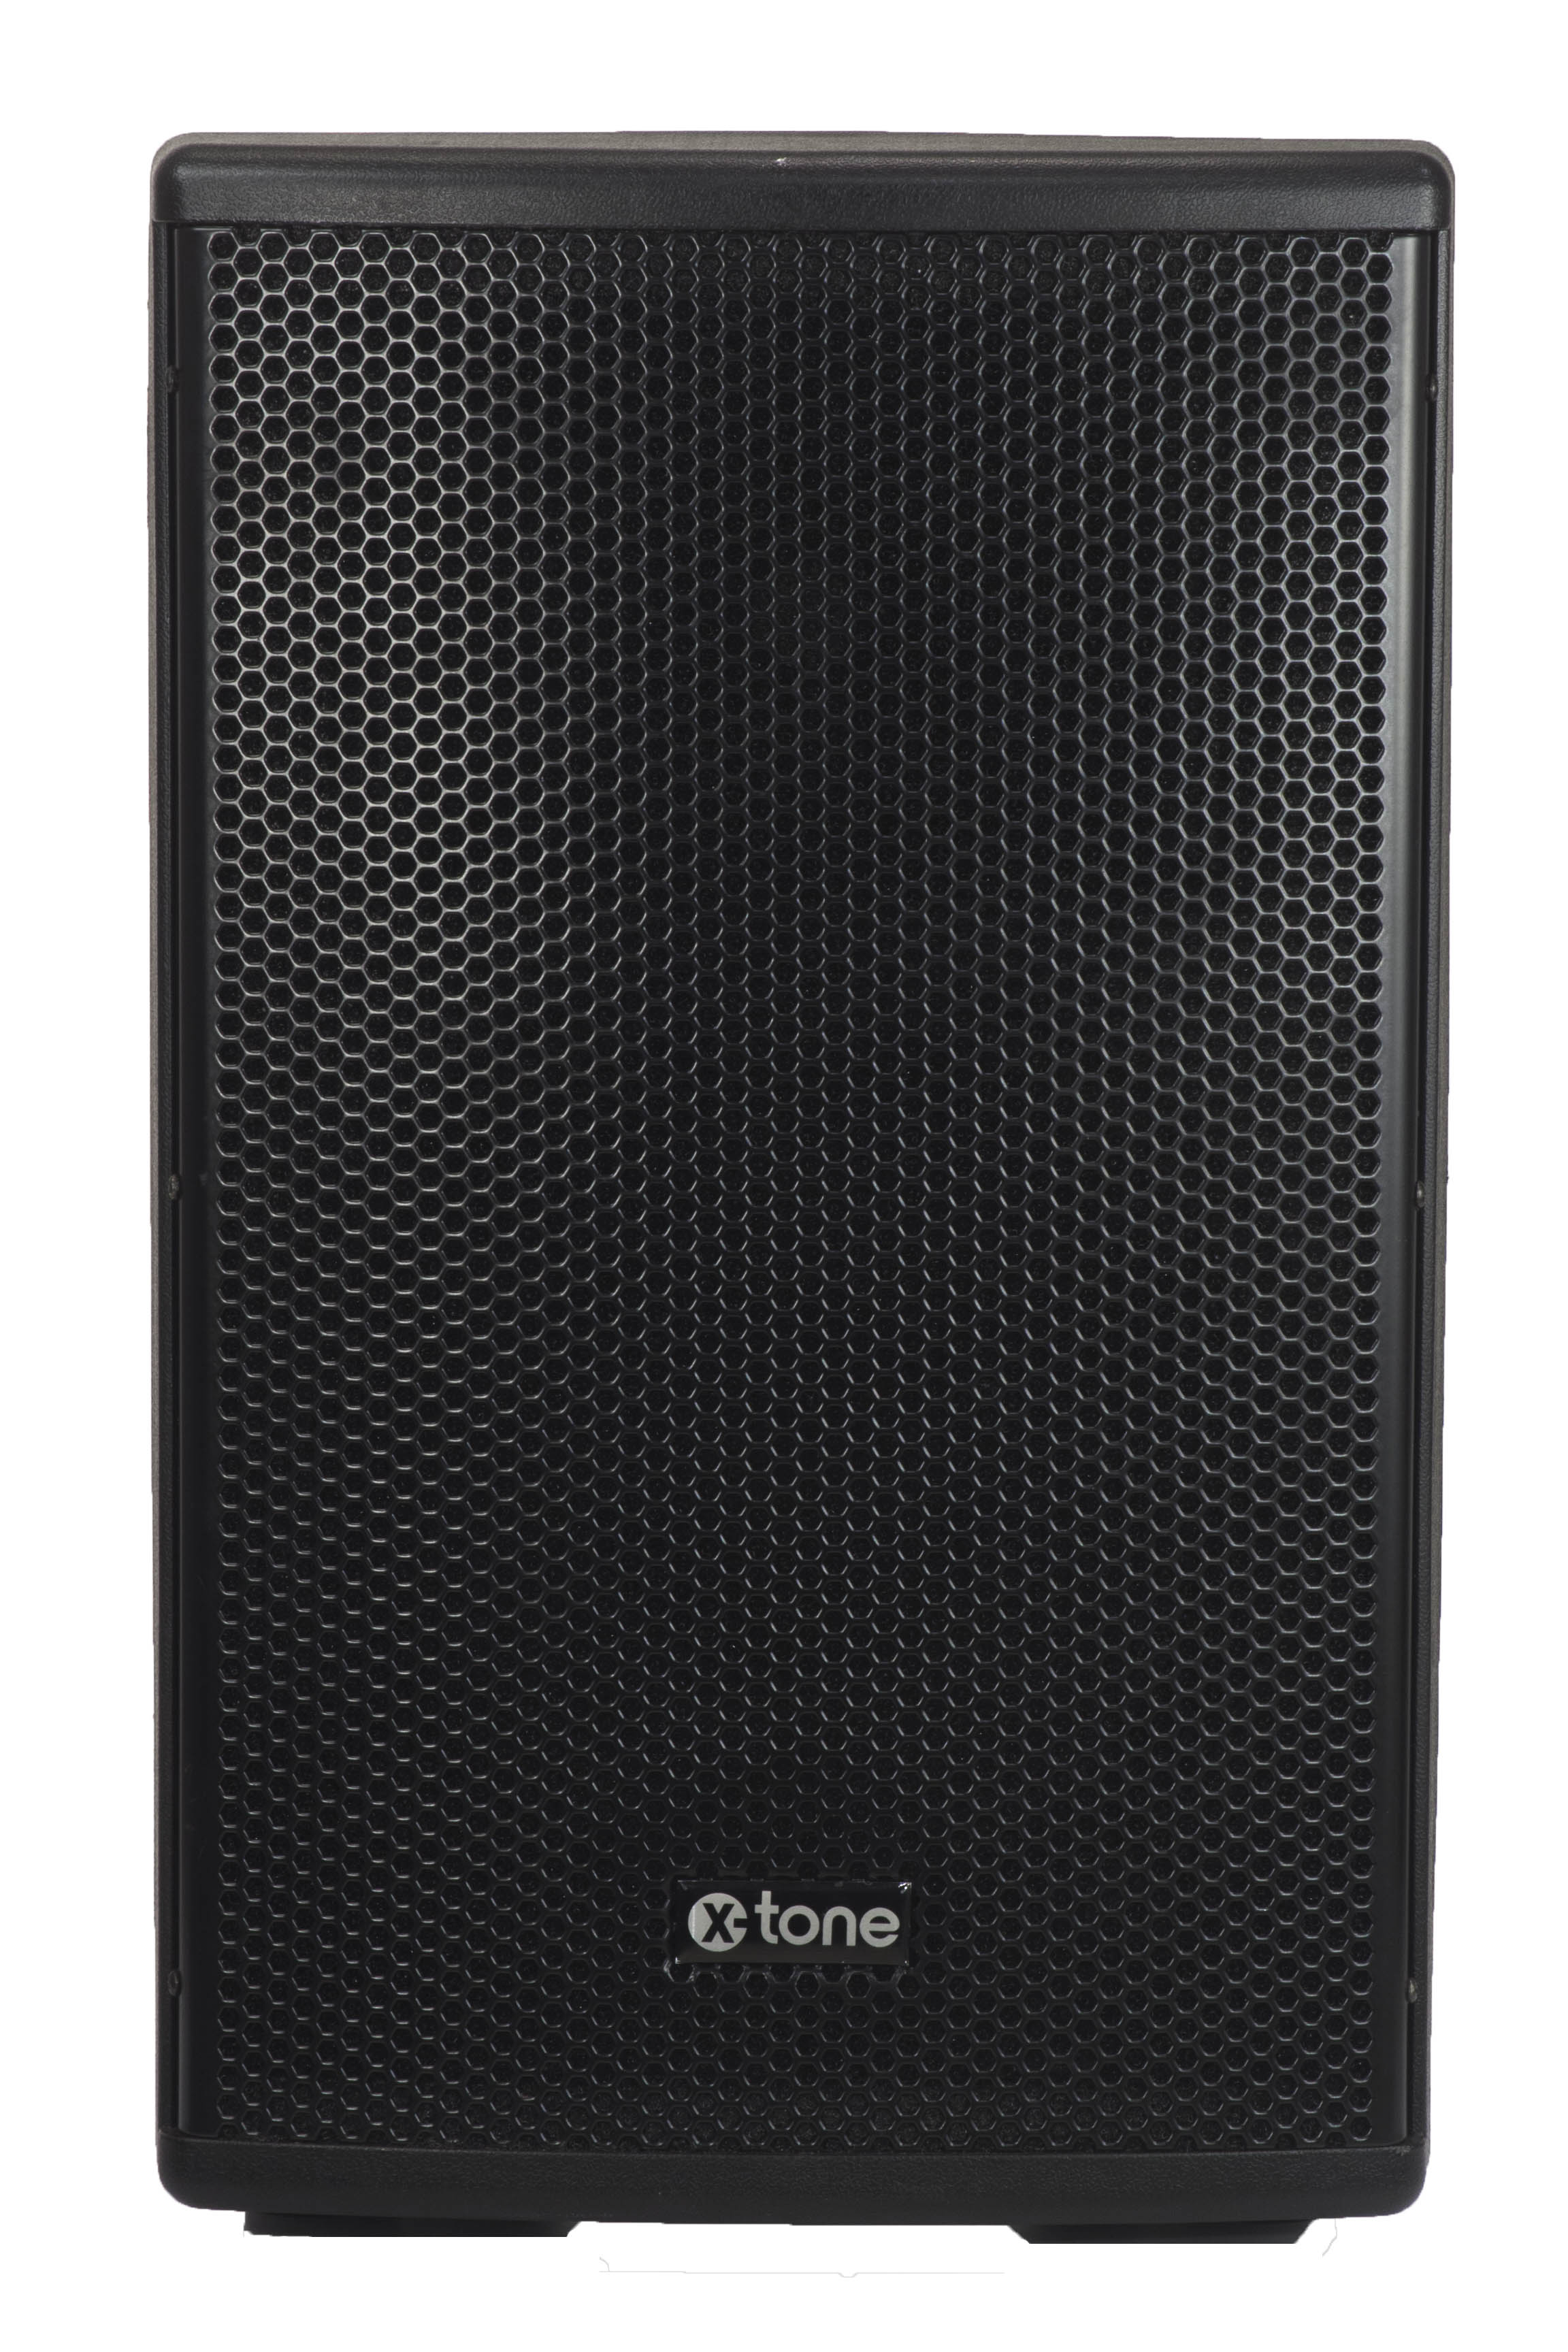 X-tone Xts-10 - Aktive Lautsprecher - Variation 1